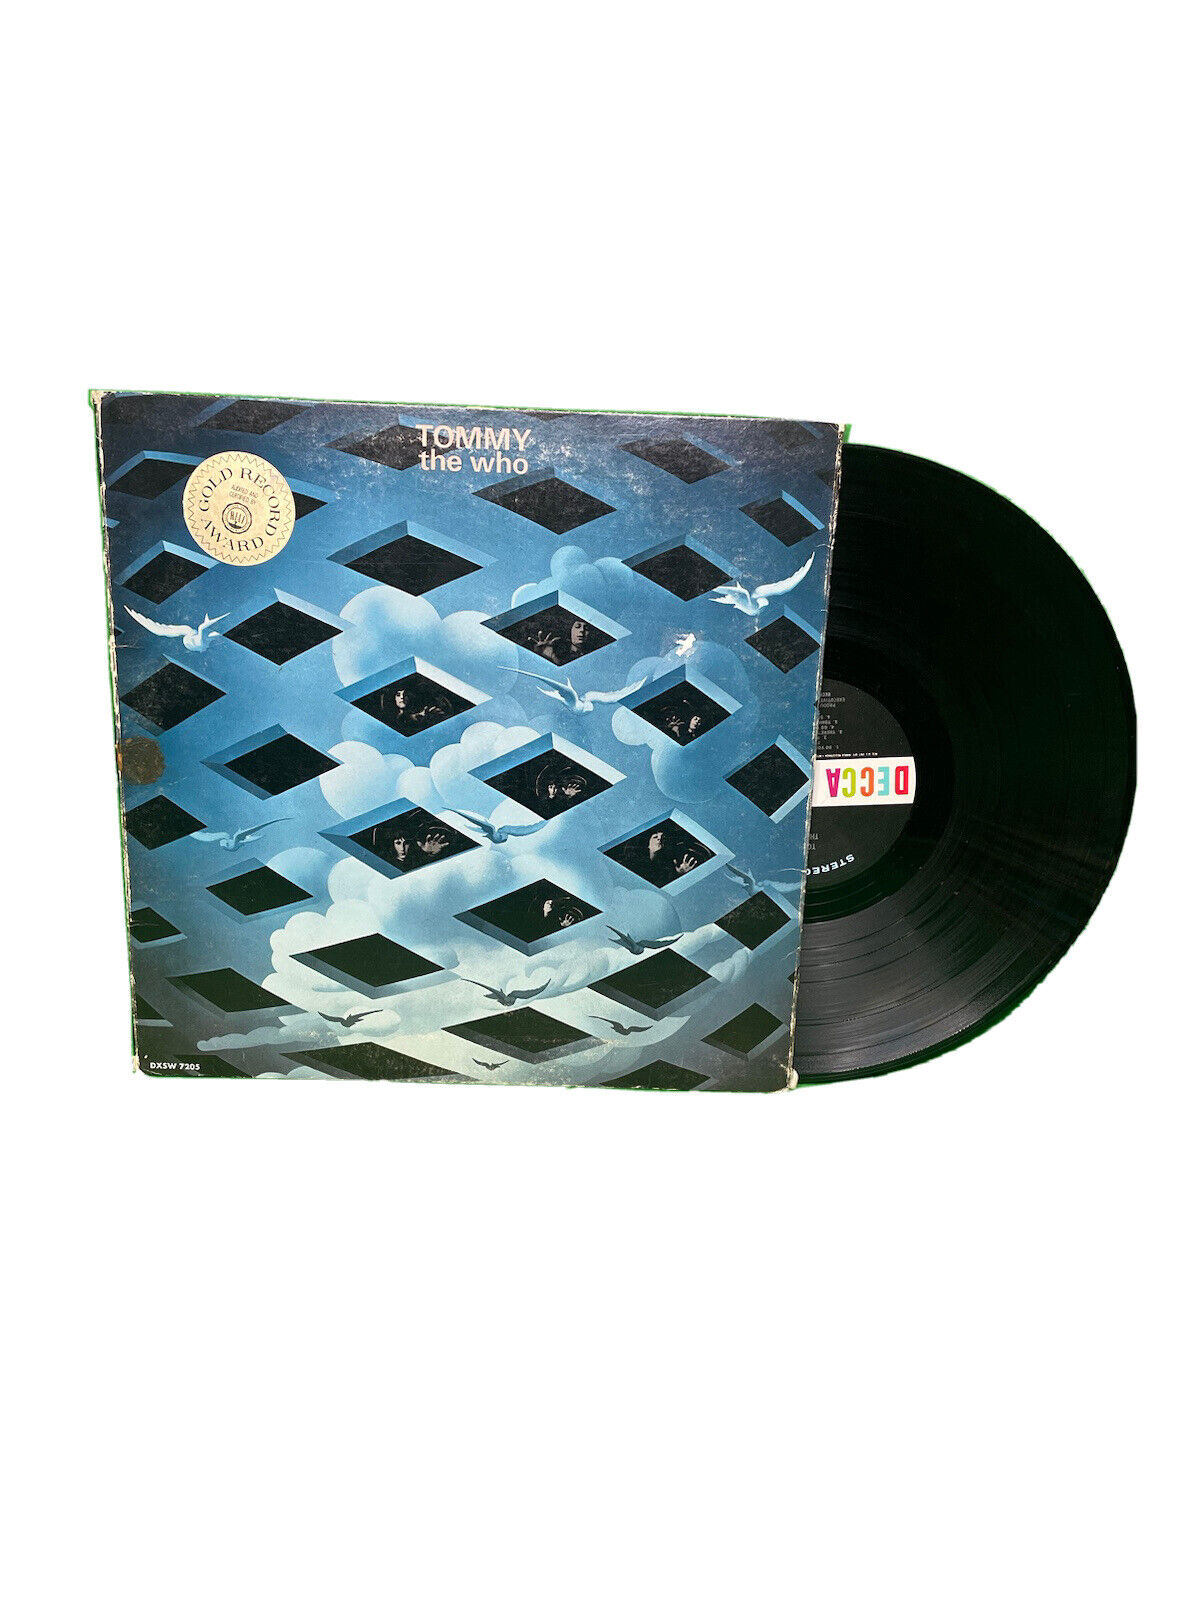 Lp THE WHO - TOMMY 2 LP EX VINYLS Original Decca DXSW 7205 G+ G+ Gold Record Award